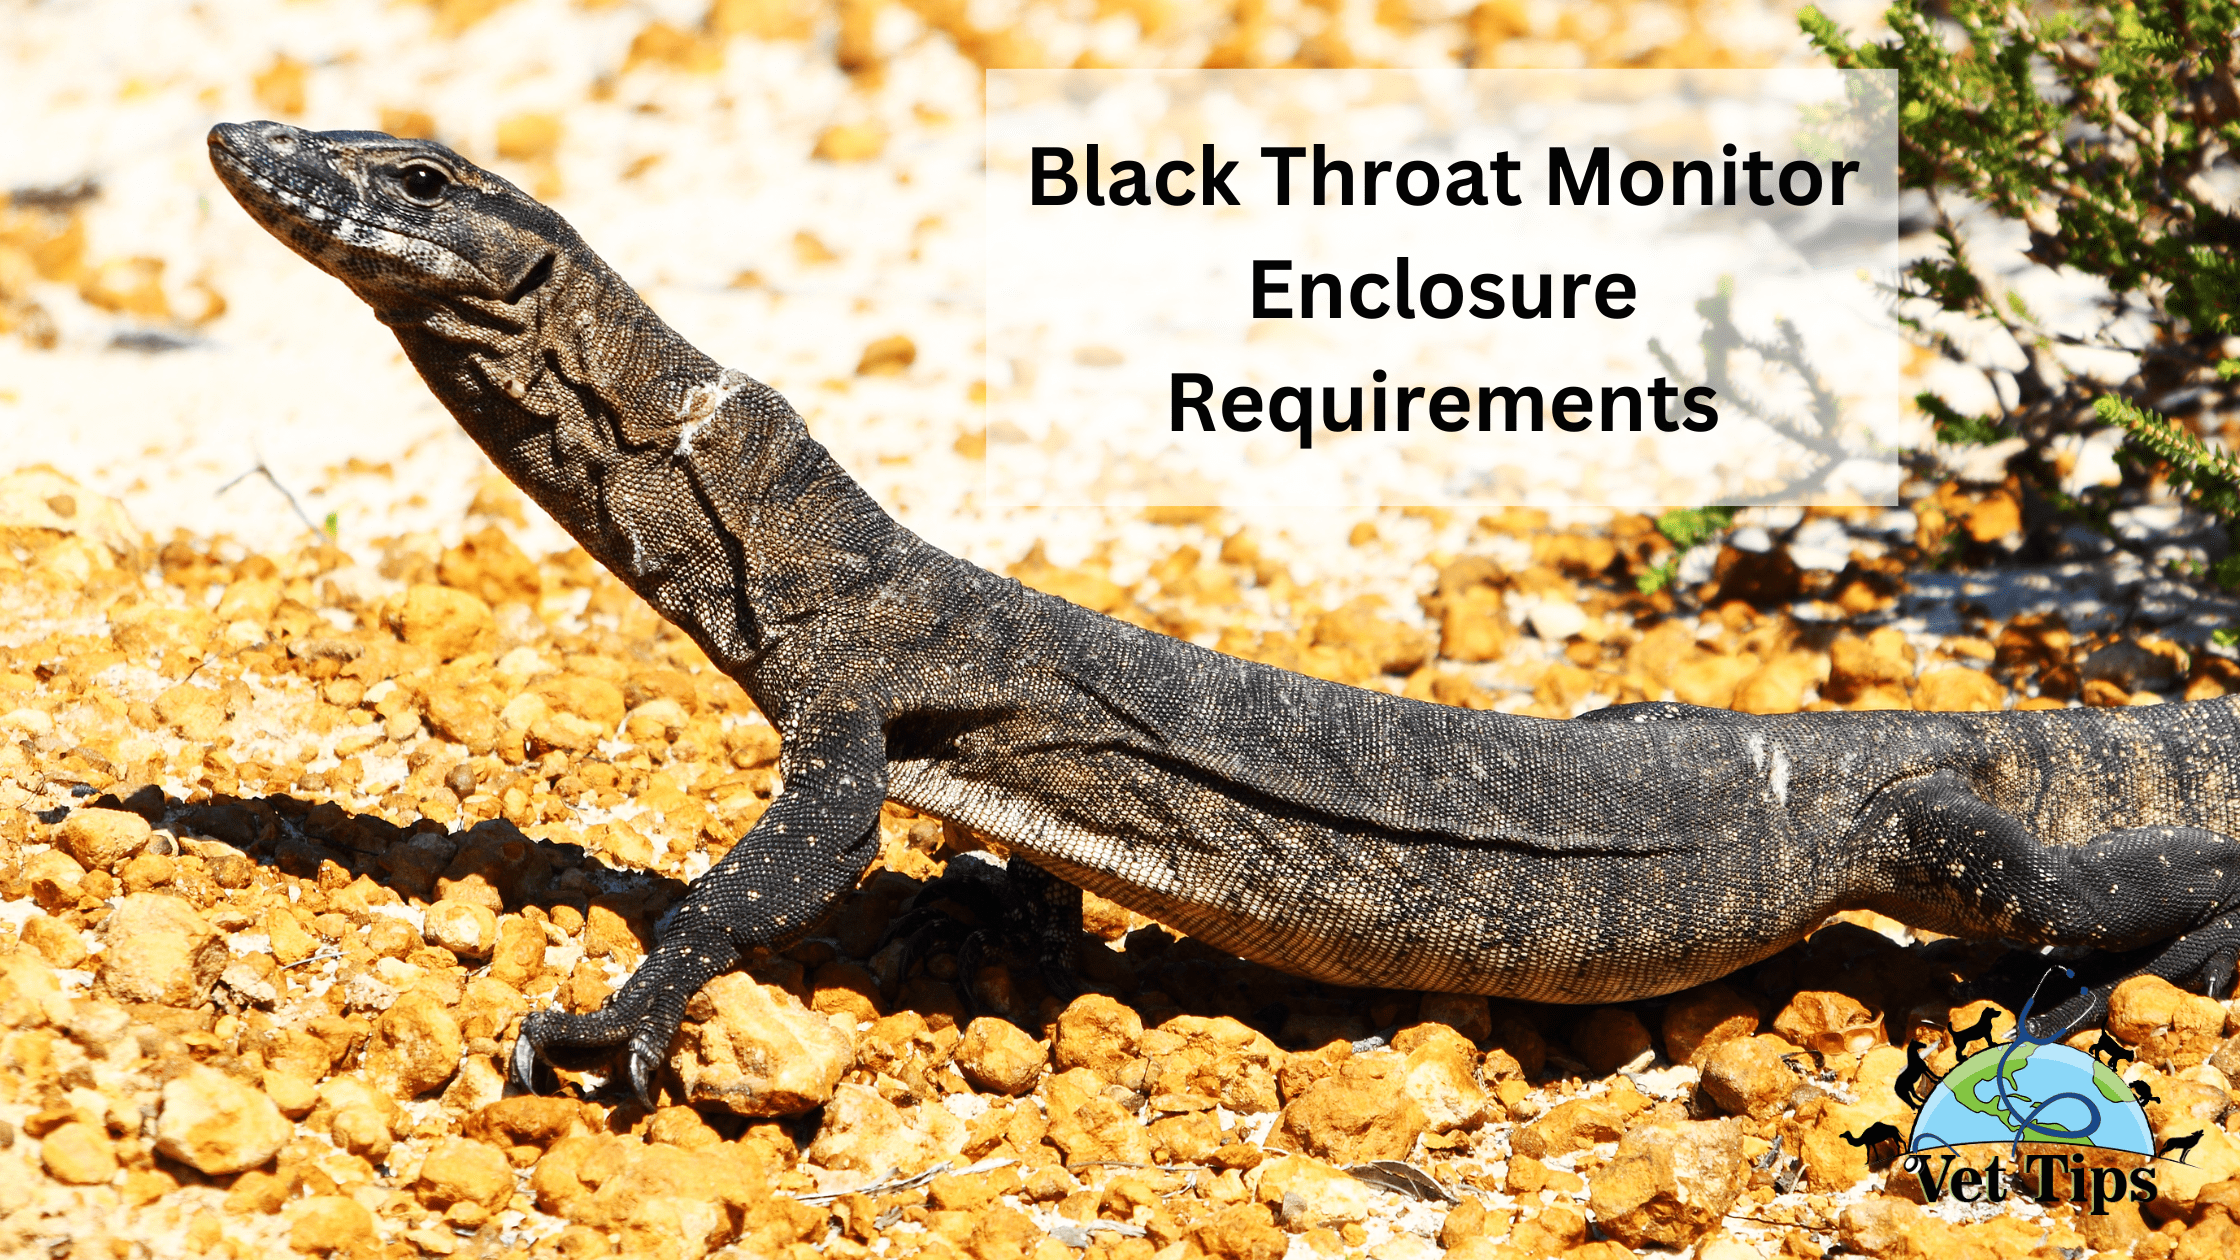 Black Throat Monitor Enclosure Requirements